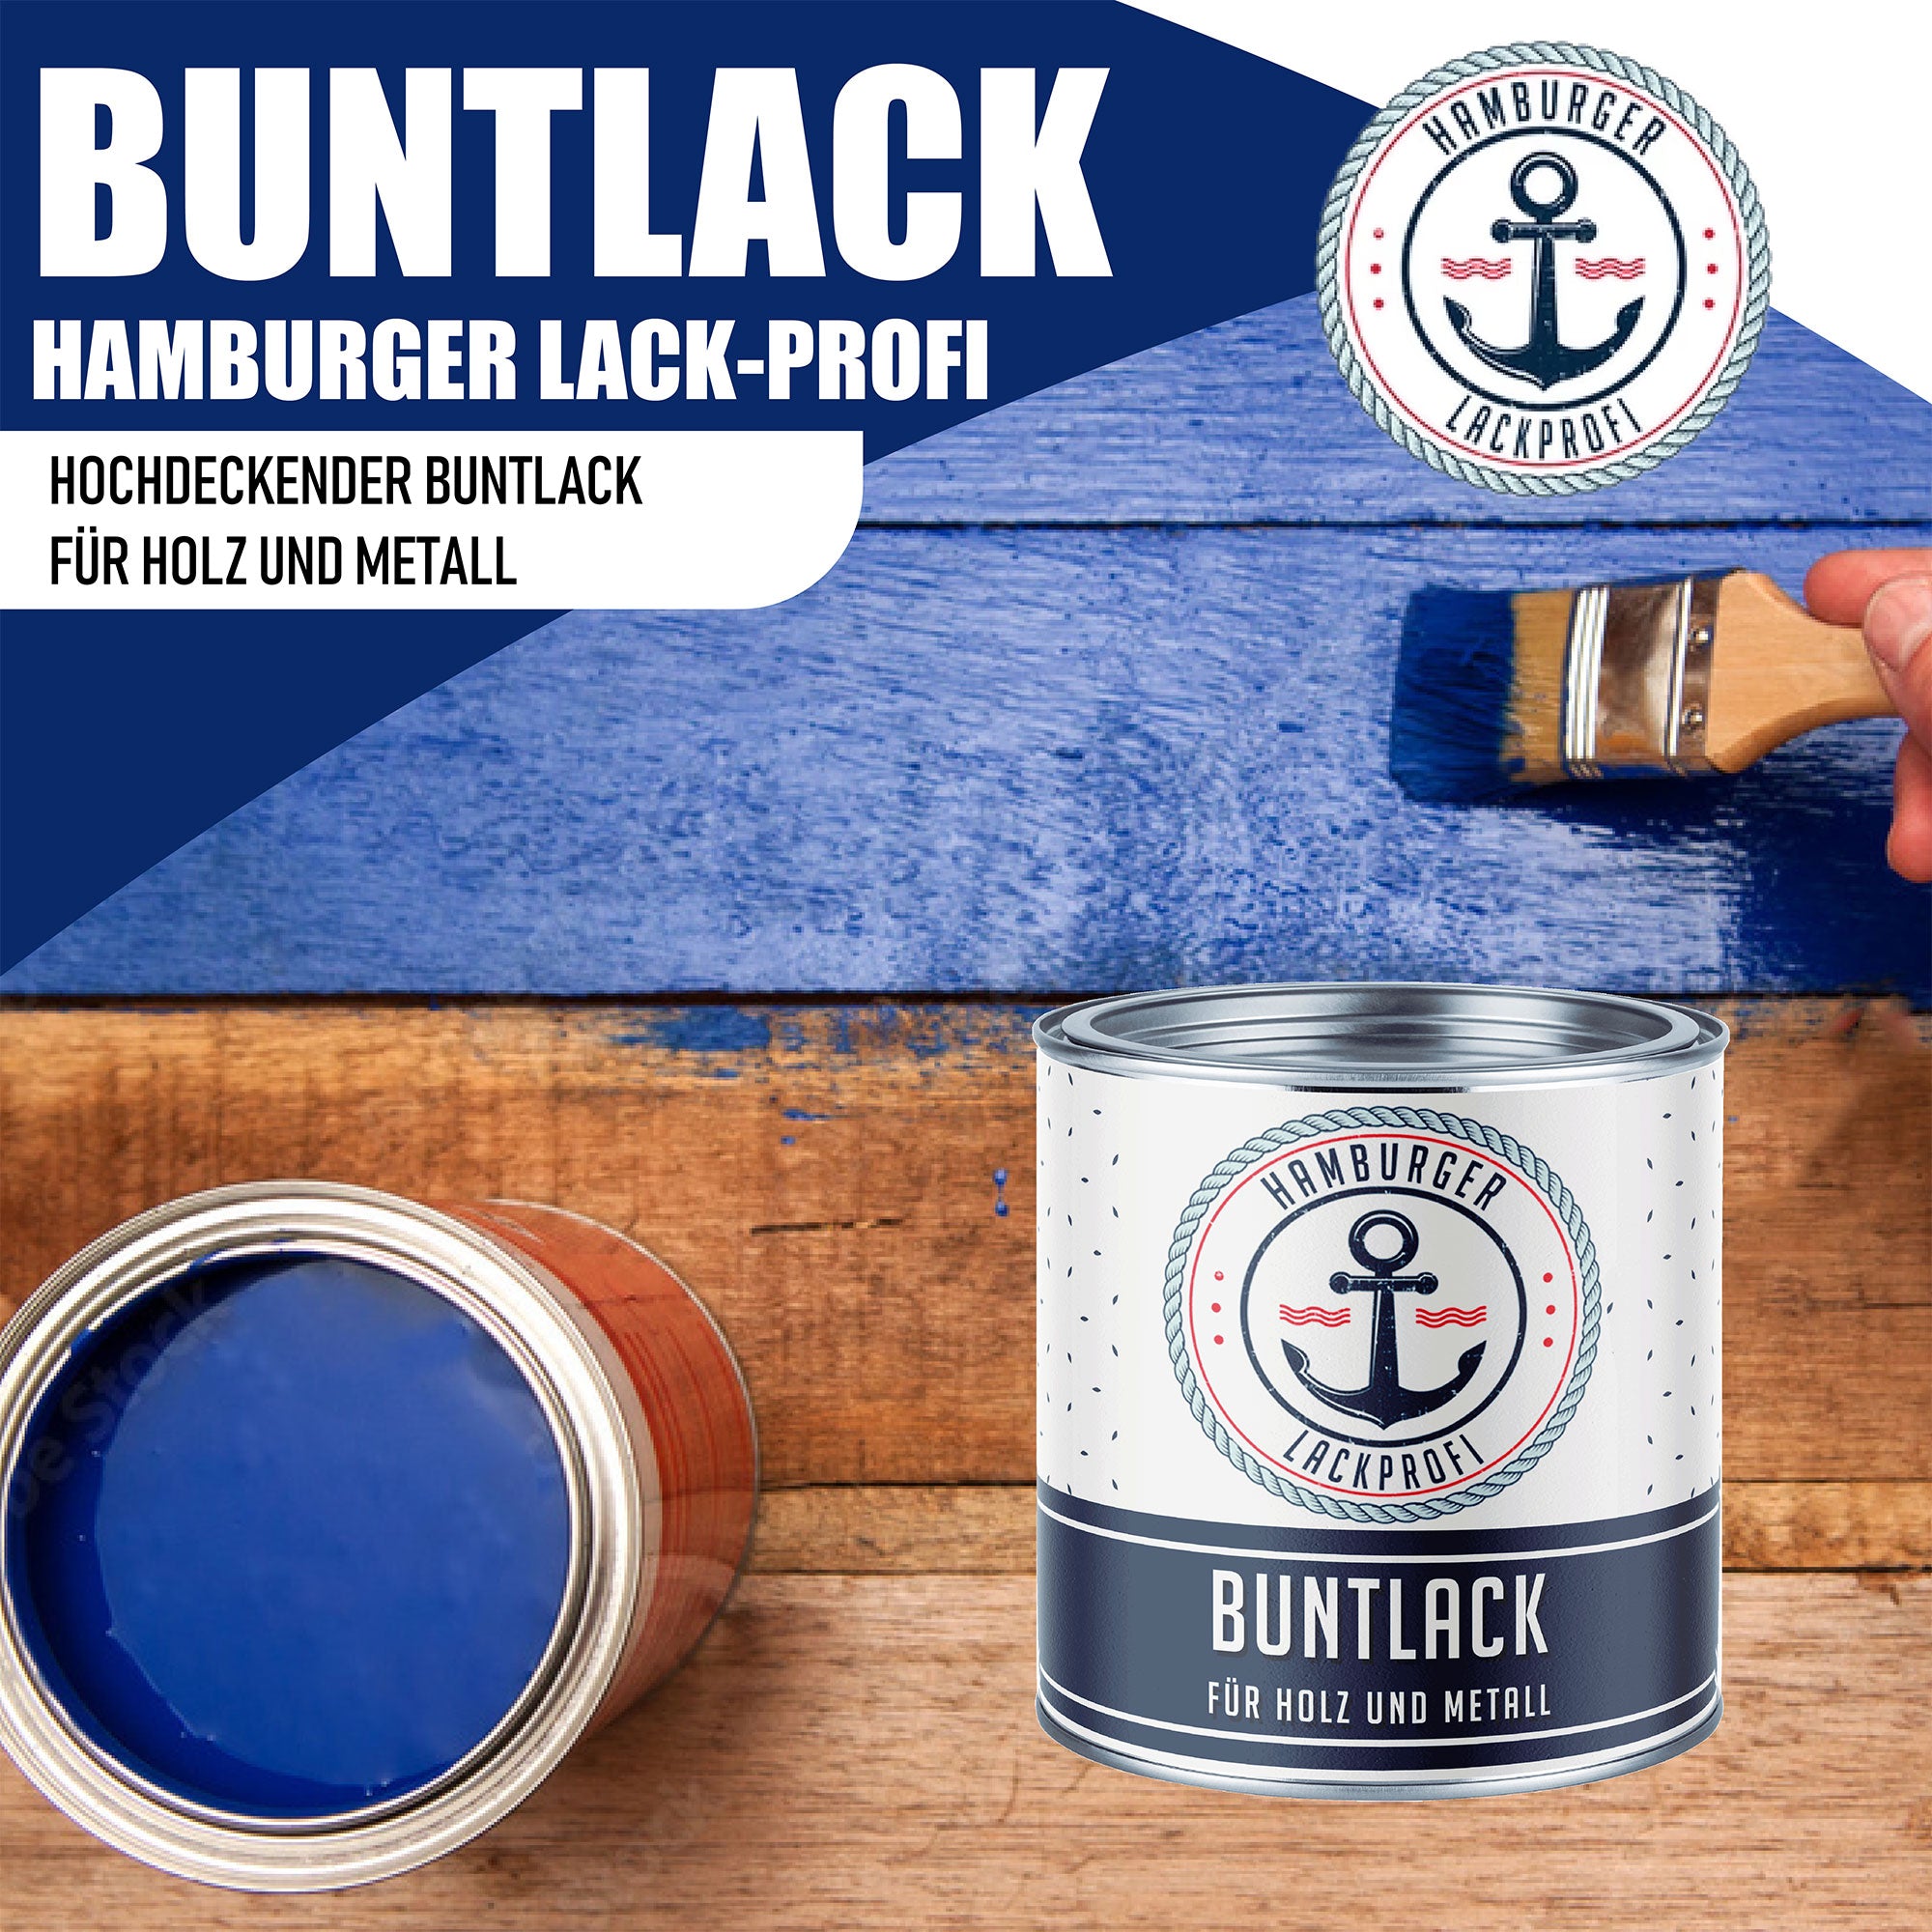 Hamburger Lack-Profi Buntlack in Moosgrün RAL 6005 mit Lackierset (X300) & Verdünnung (1 L) - 30% Sparangebot